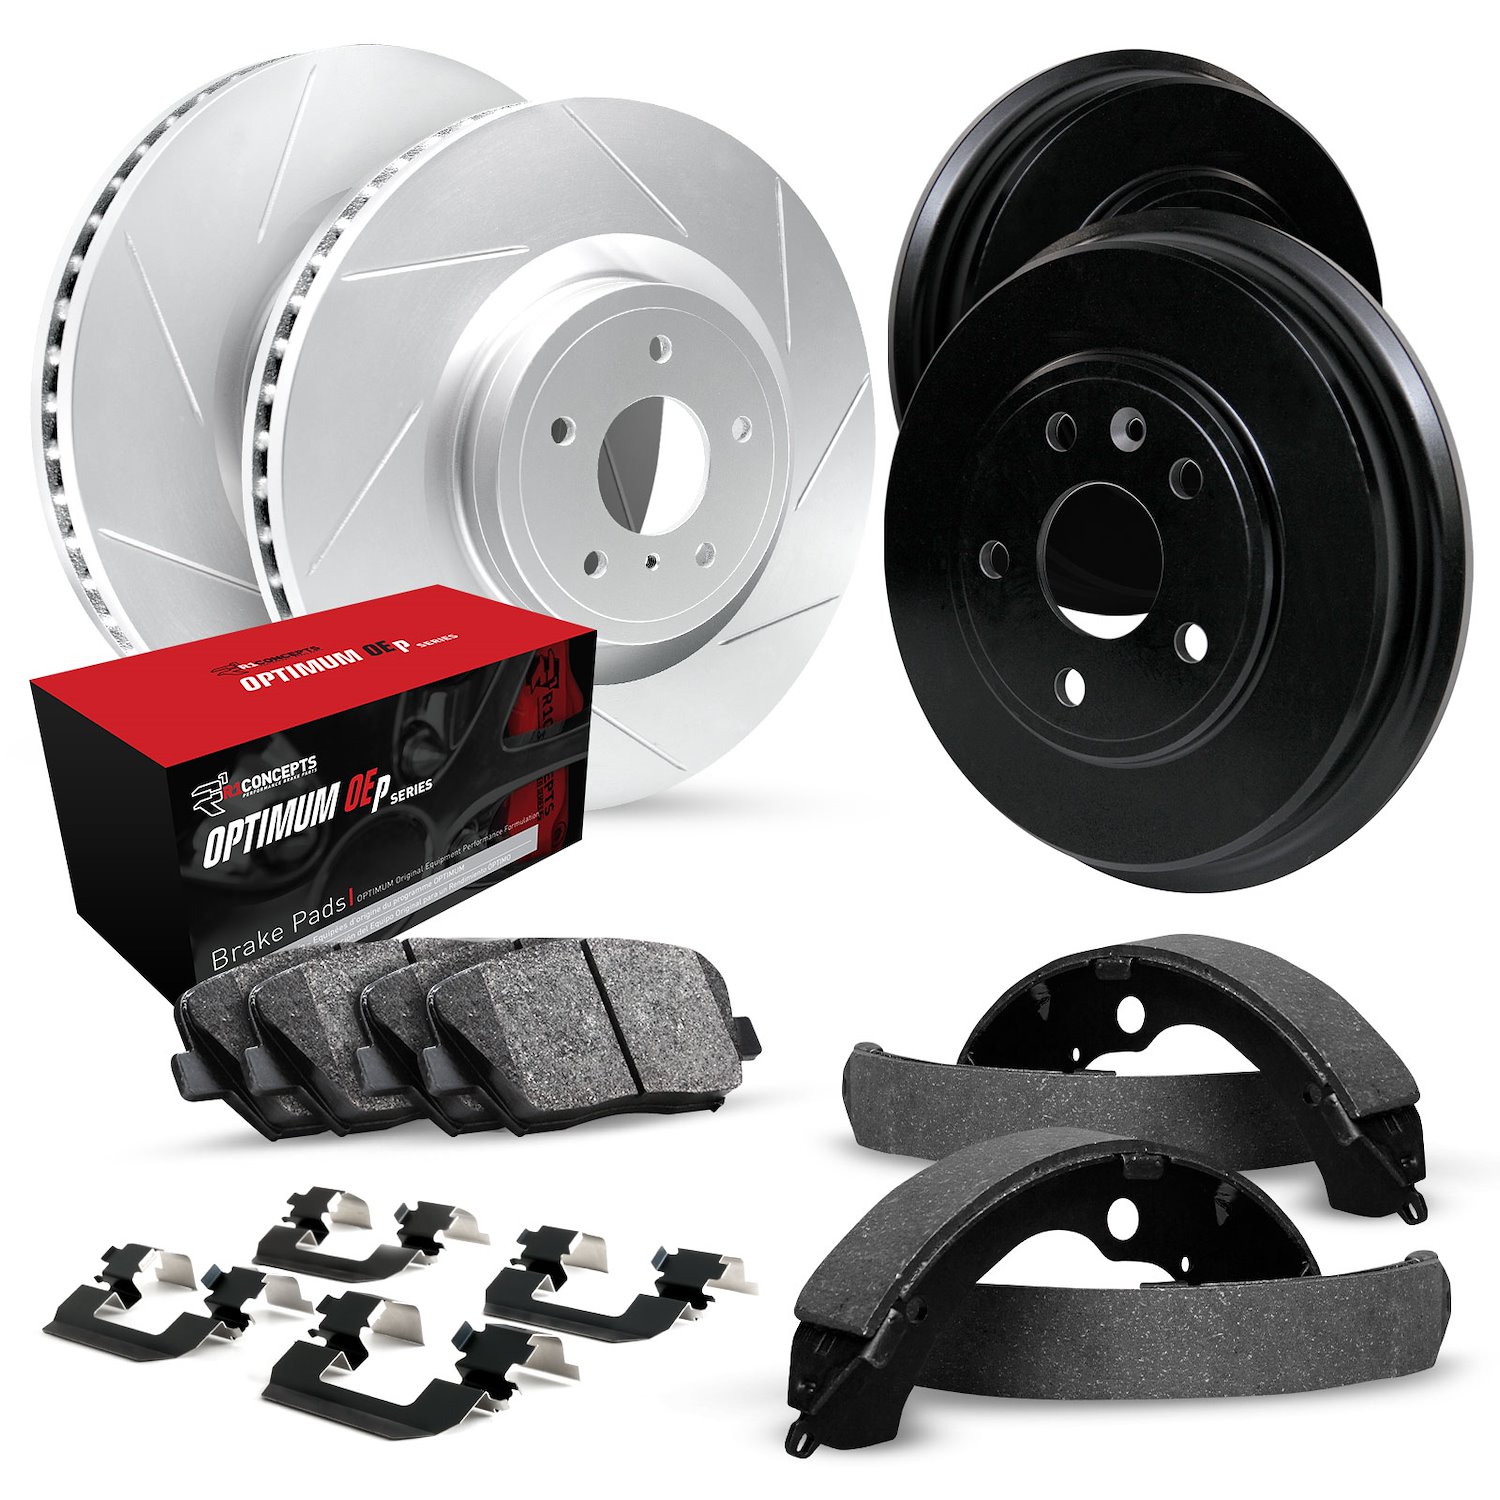 GEO-Carbon Slotted Brake Rotor & Drum Set w/Optimum OE Pads, Shoes, & Hardware, 2007-2014 Infiniti/Nissan